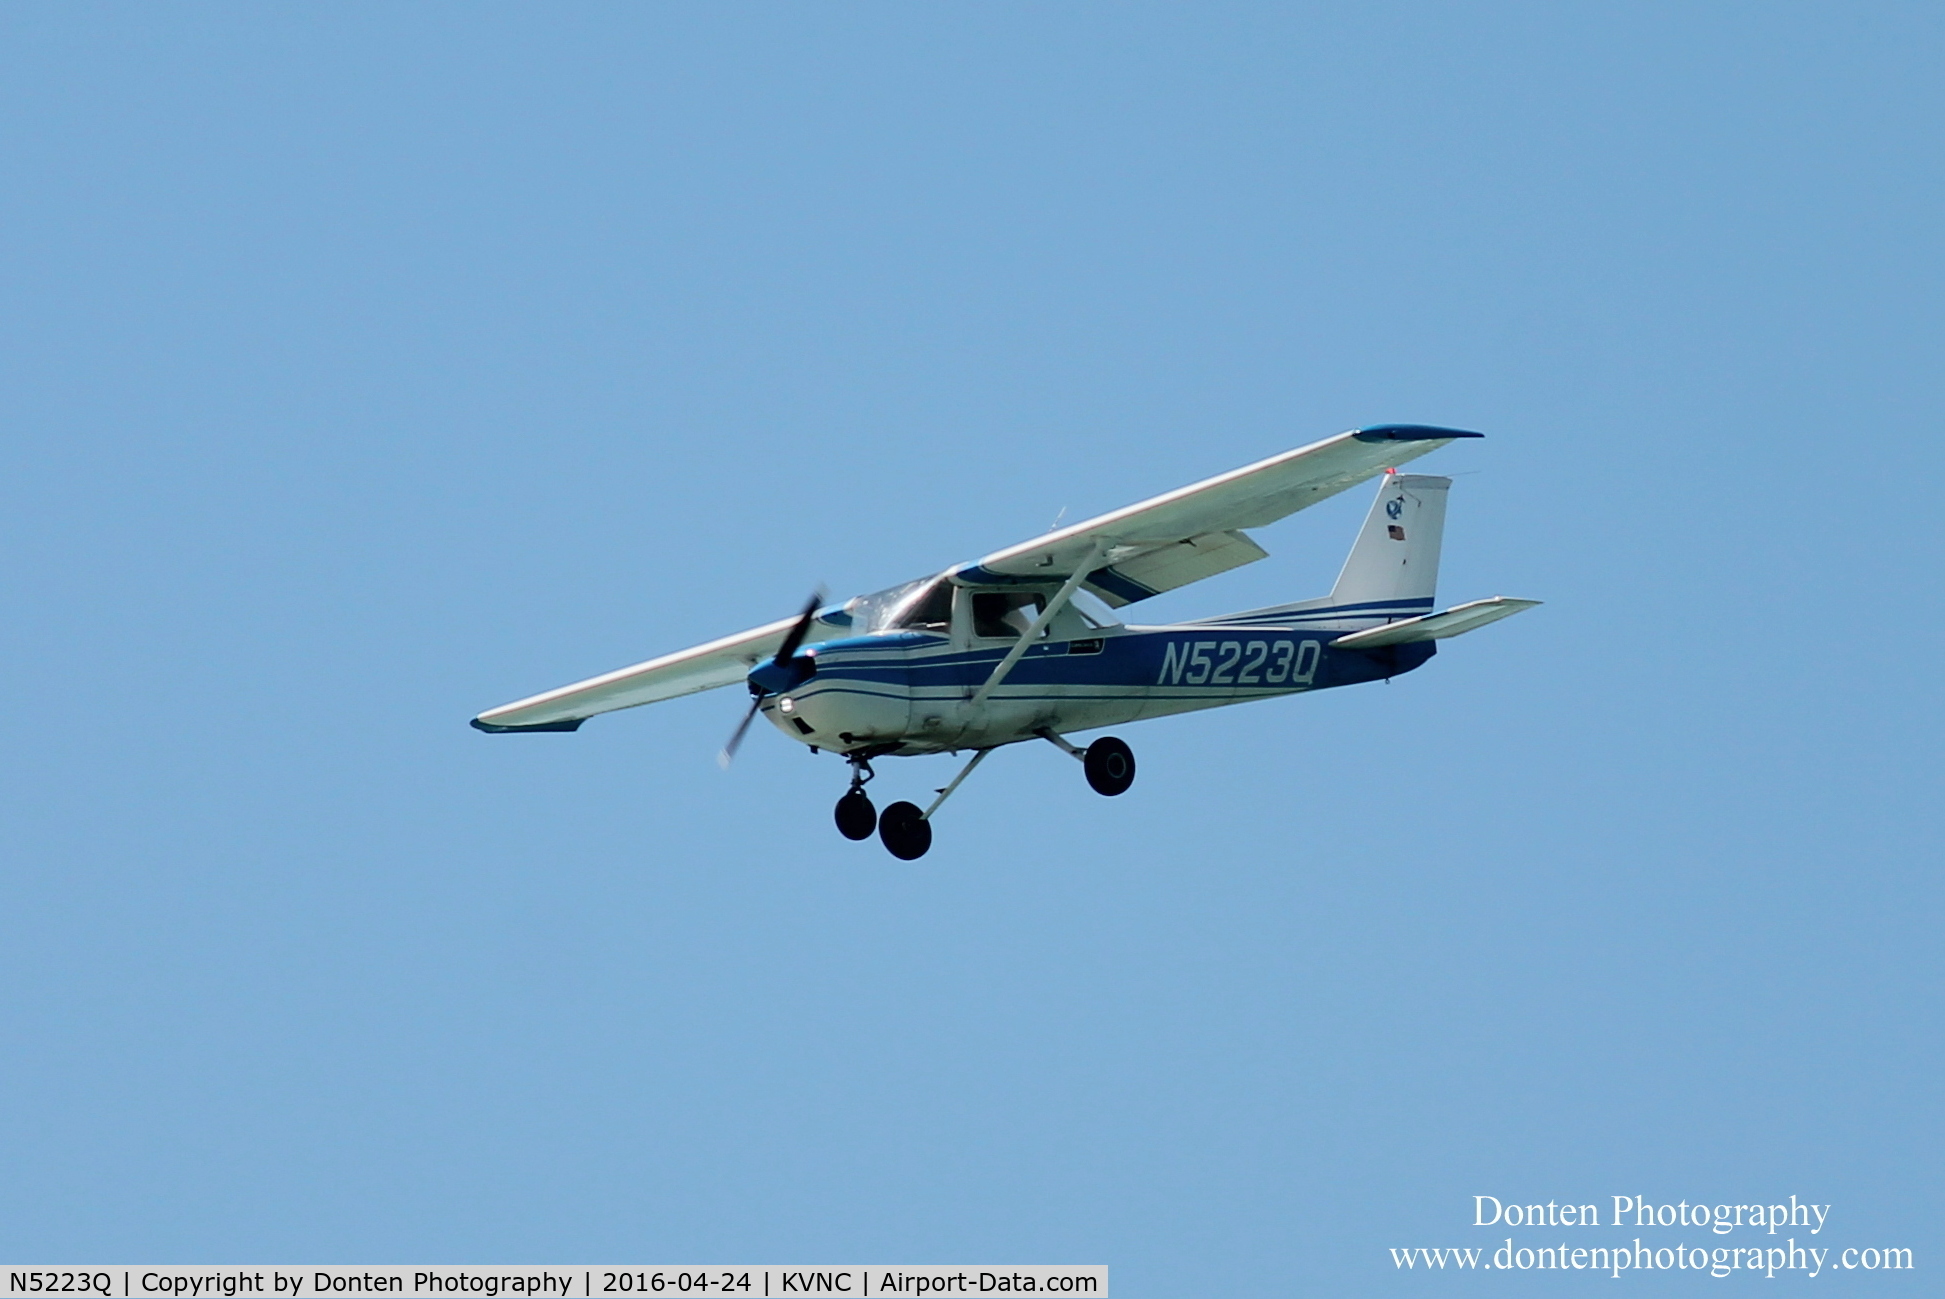 N5223Q, 1971 Cessna 150L C/N 15073123, Cessna 150 (N5223Q) arrives at Venice Municipal Airport